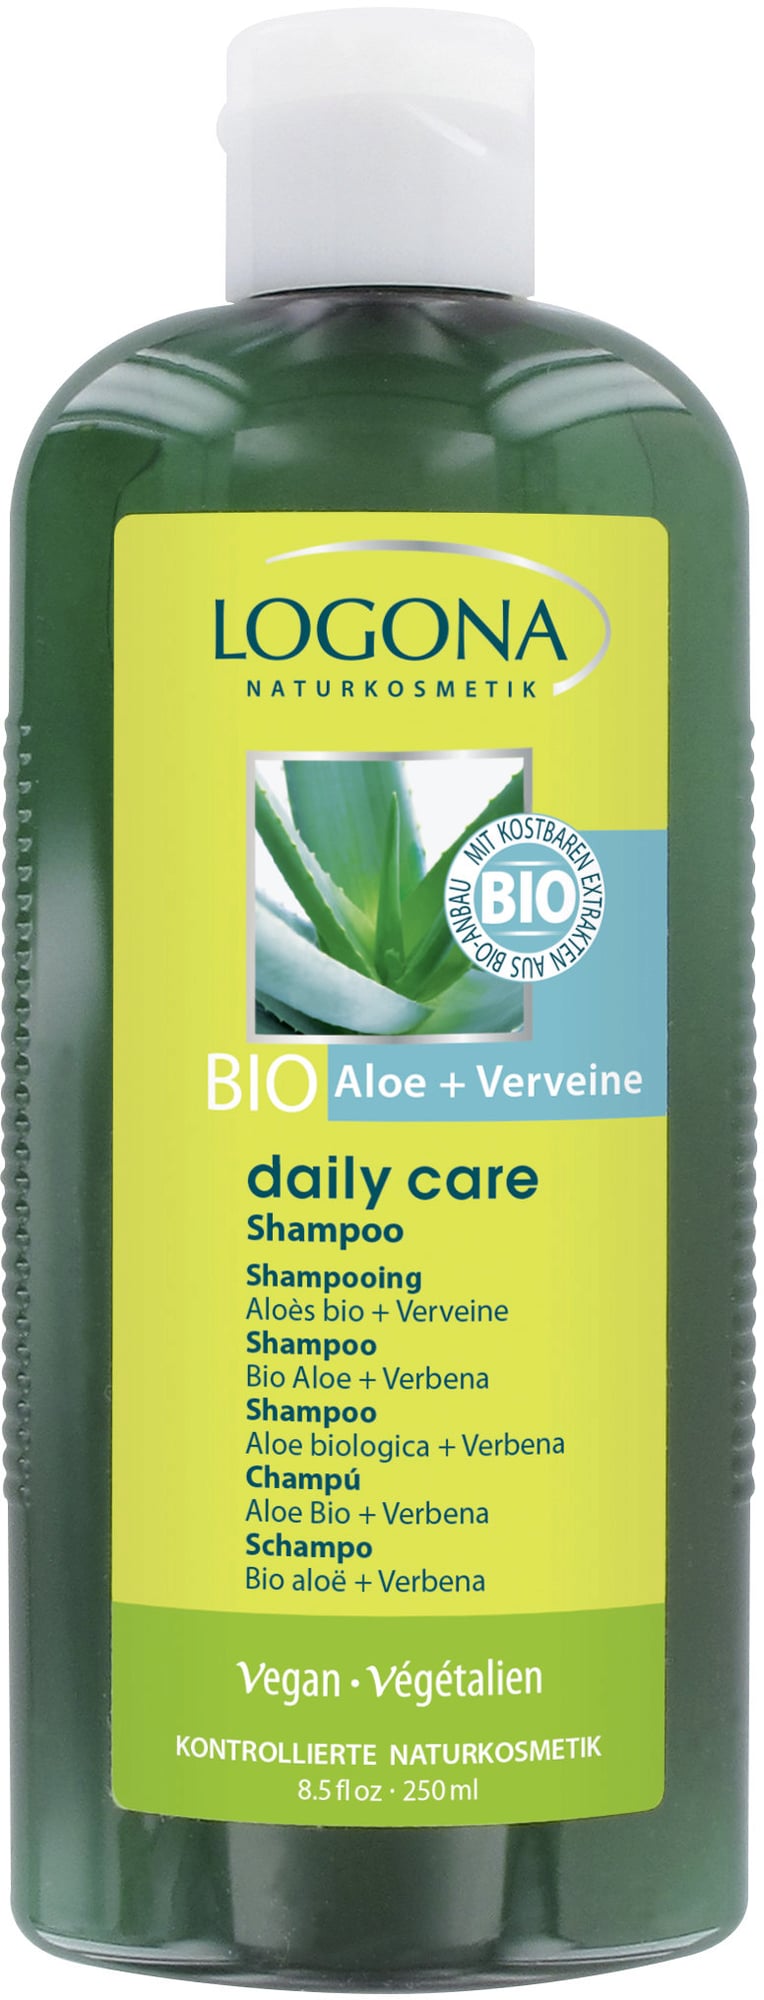 logona-daily-care-aloe-verbena-shampoo-250-ml-708660-en